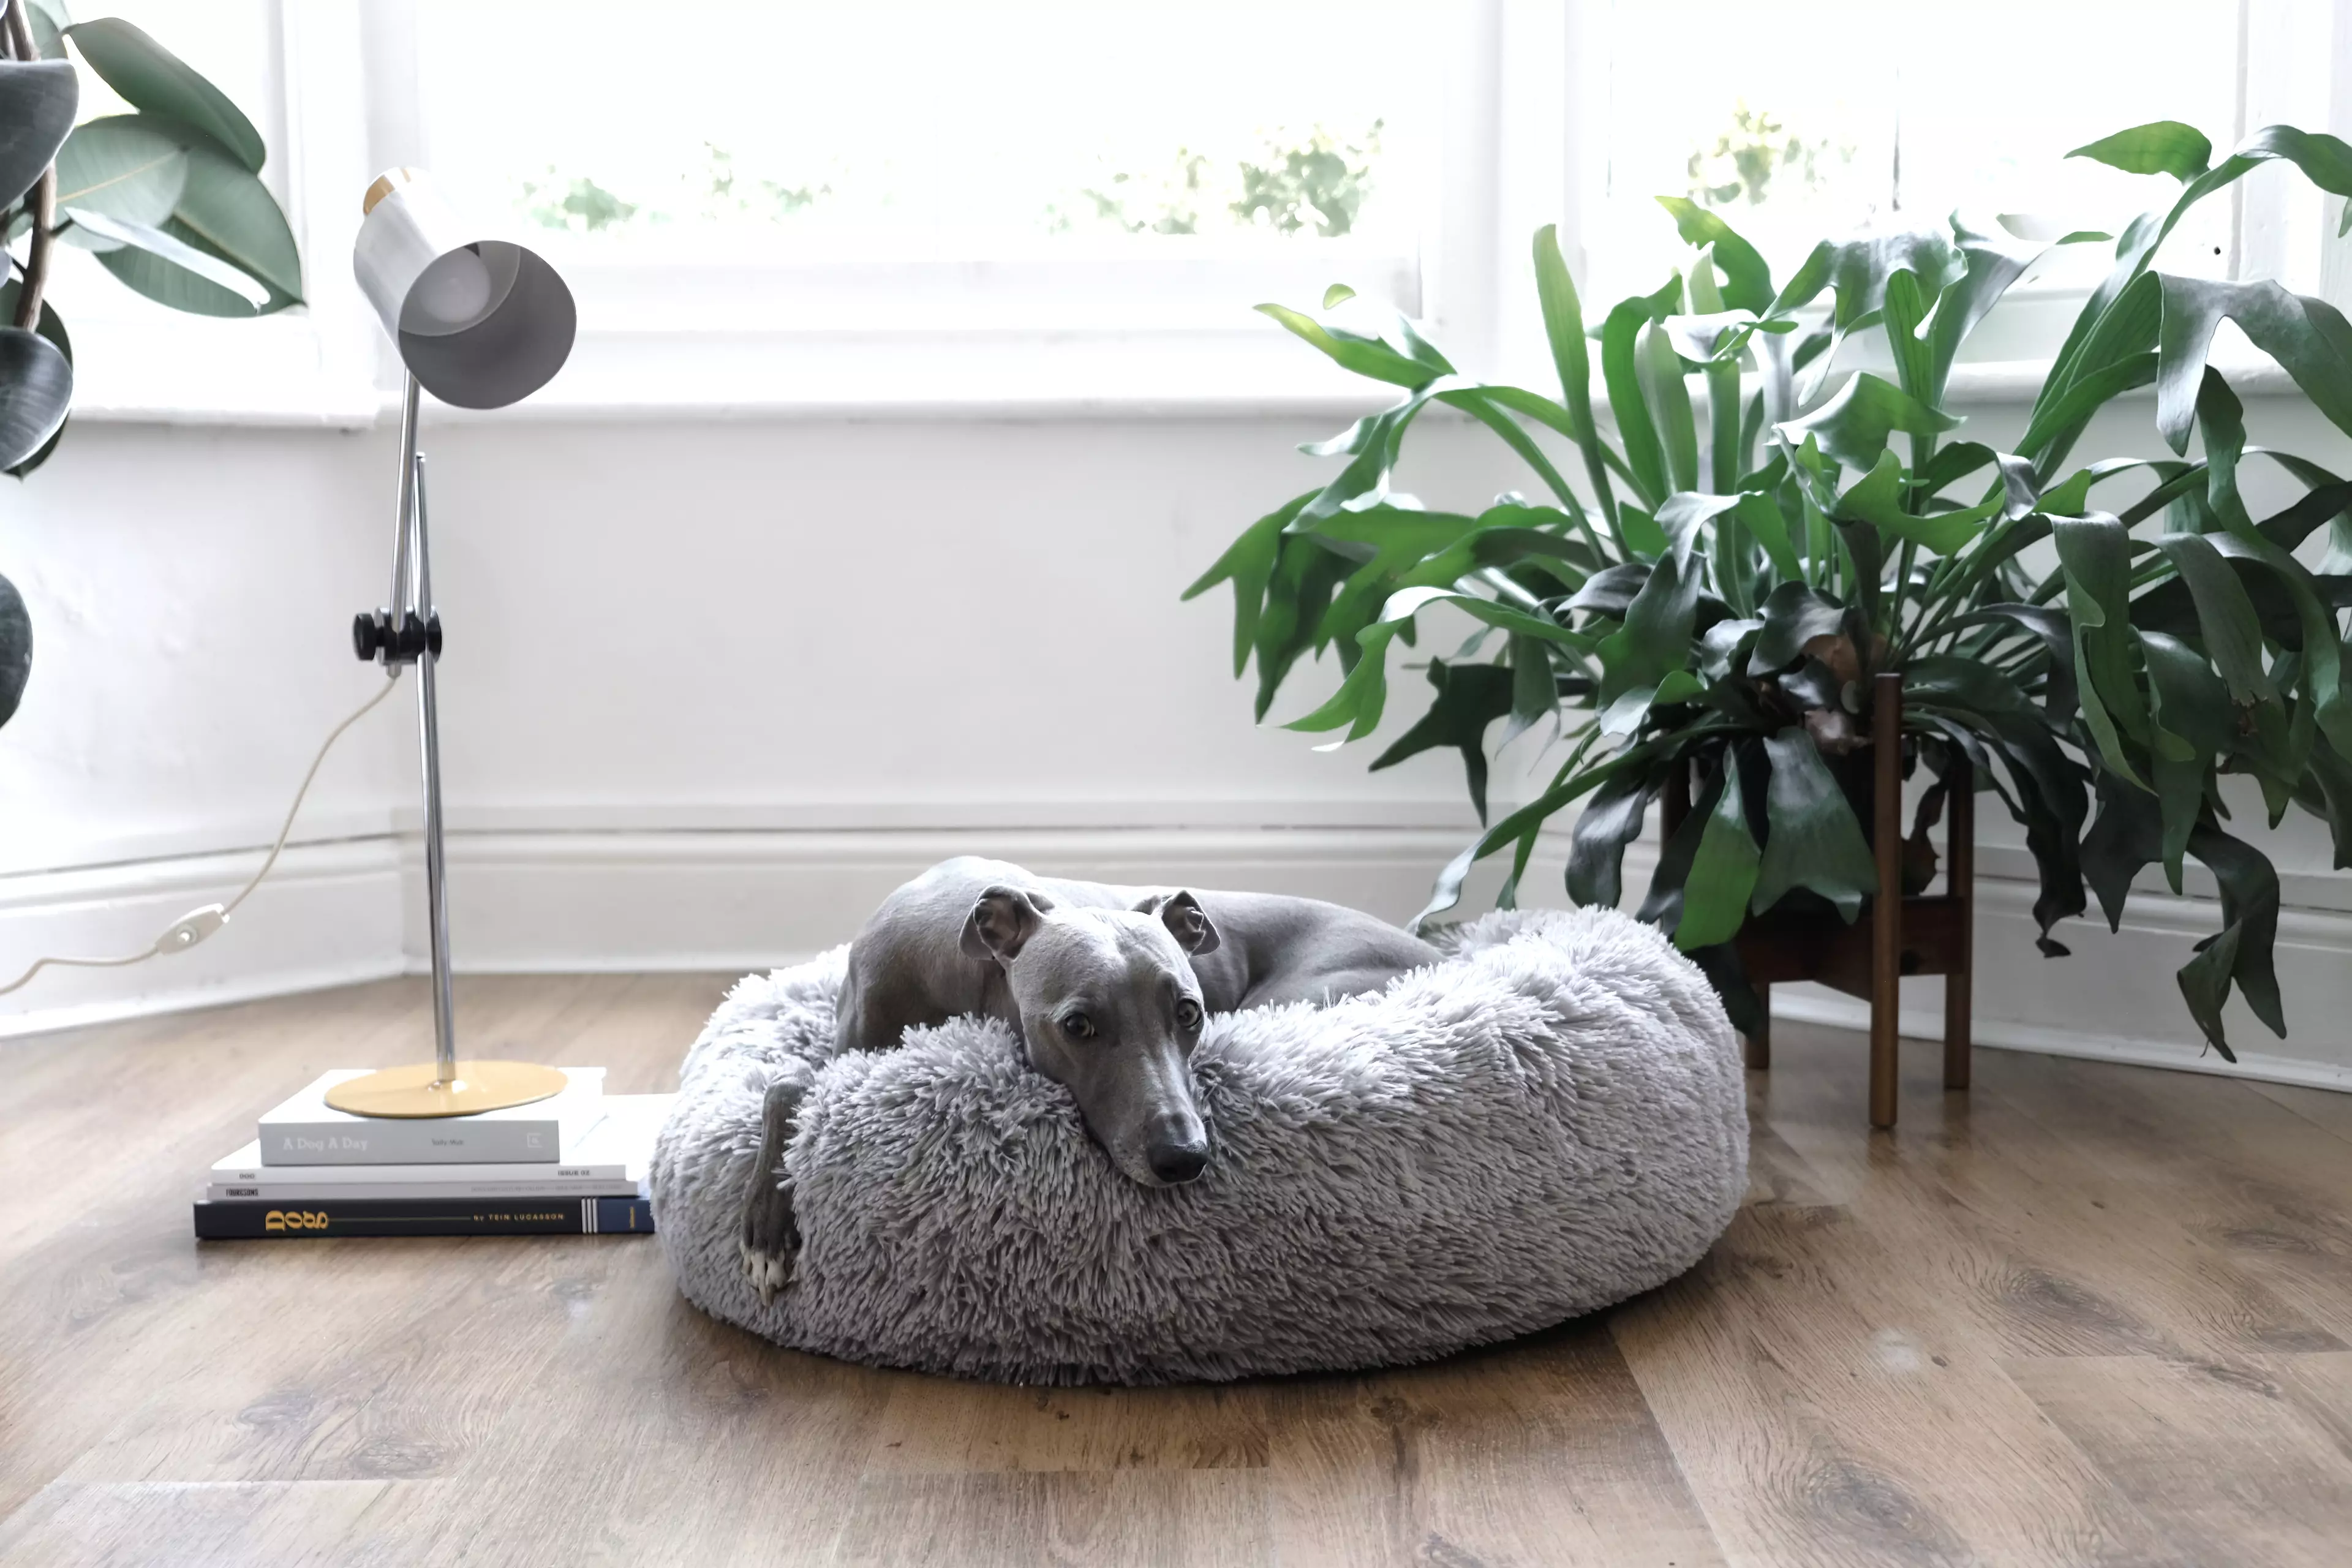 Lloyd also tested a fleecy dog bed (